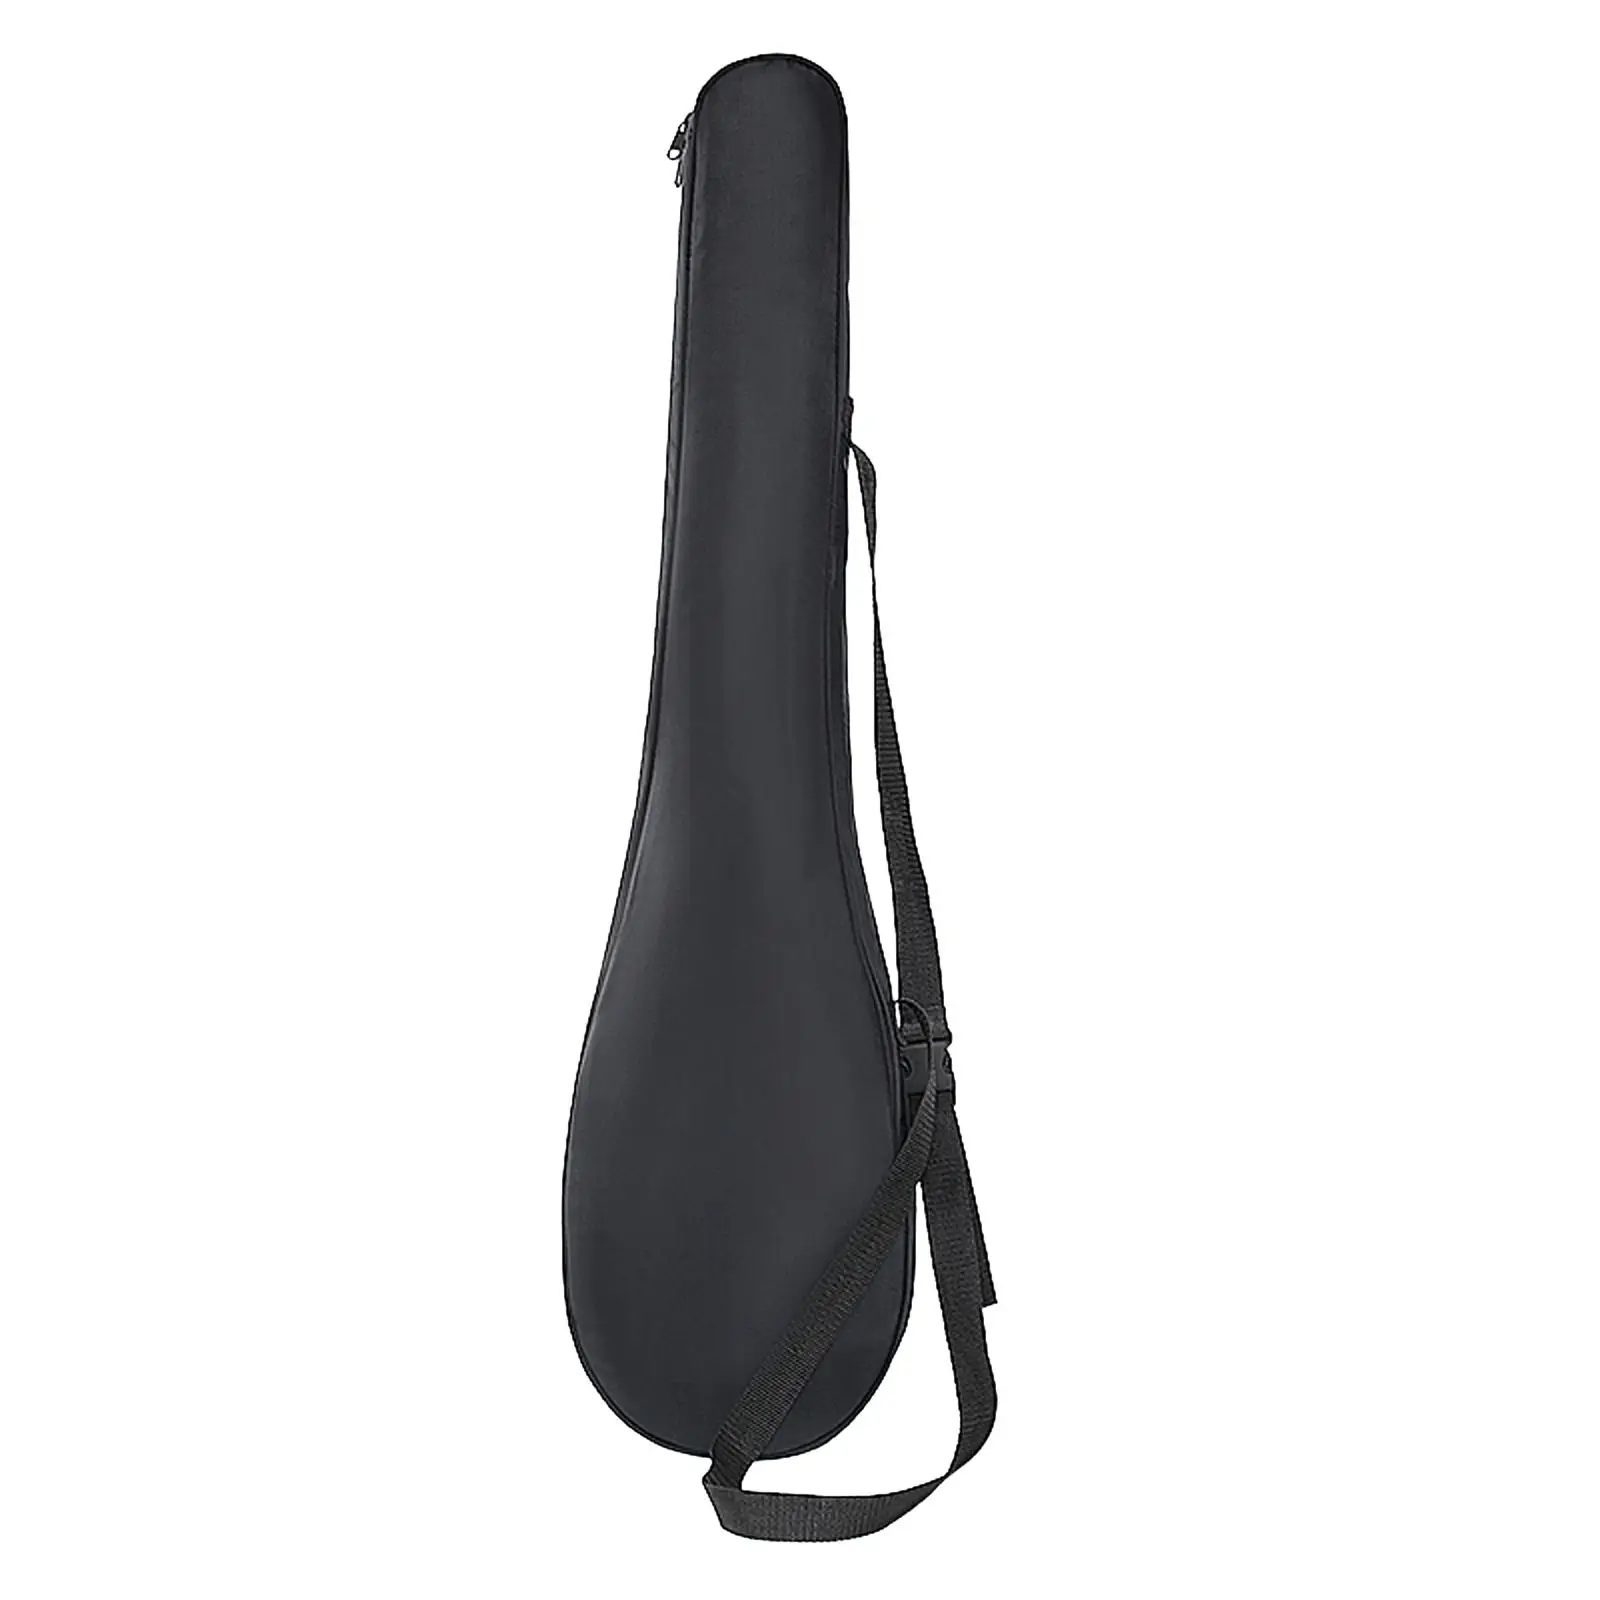 Kayak Paddle Bag Adjustable Shoulder Strap Canoe Paddle Bag with Handle Lightweight Protector Kayak Paddle Cover Paddle Carrier